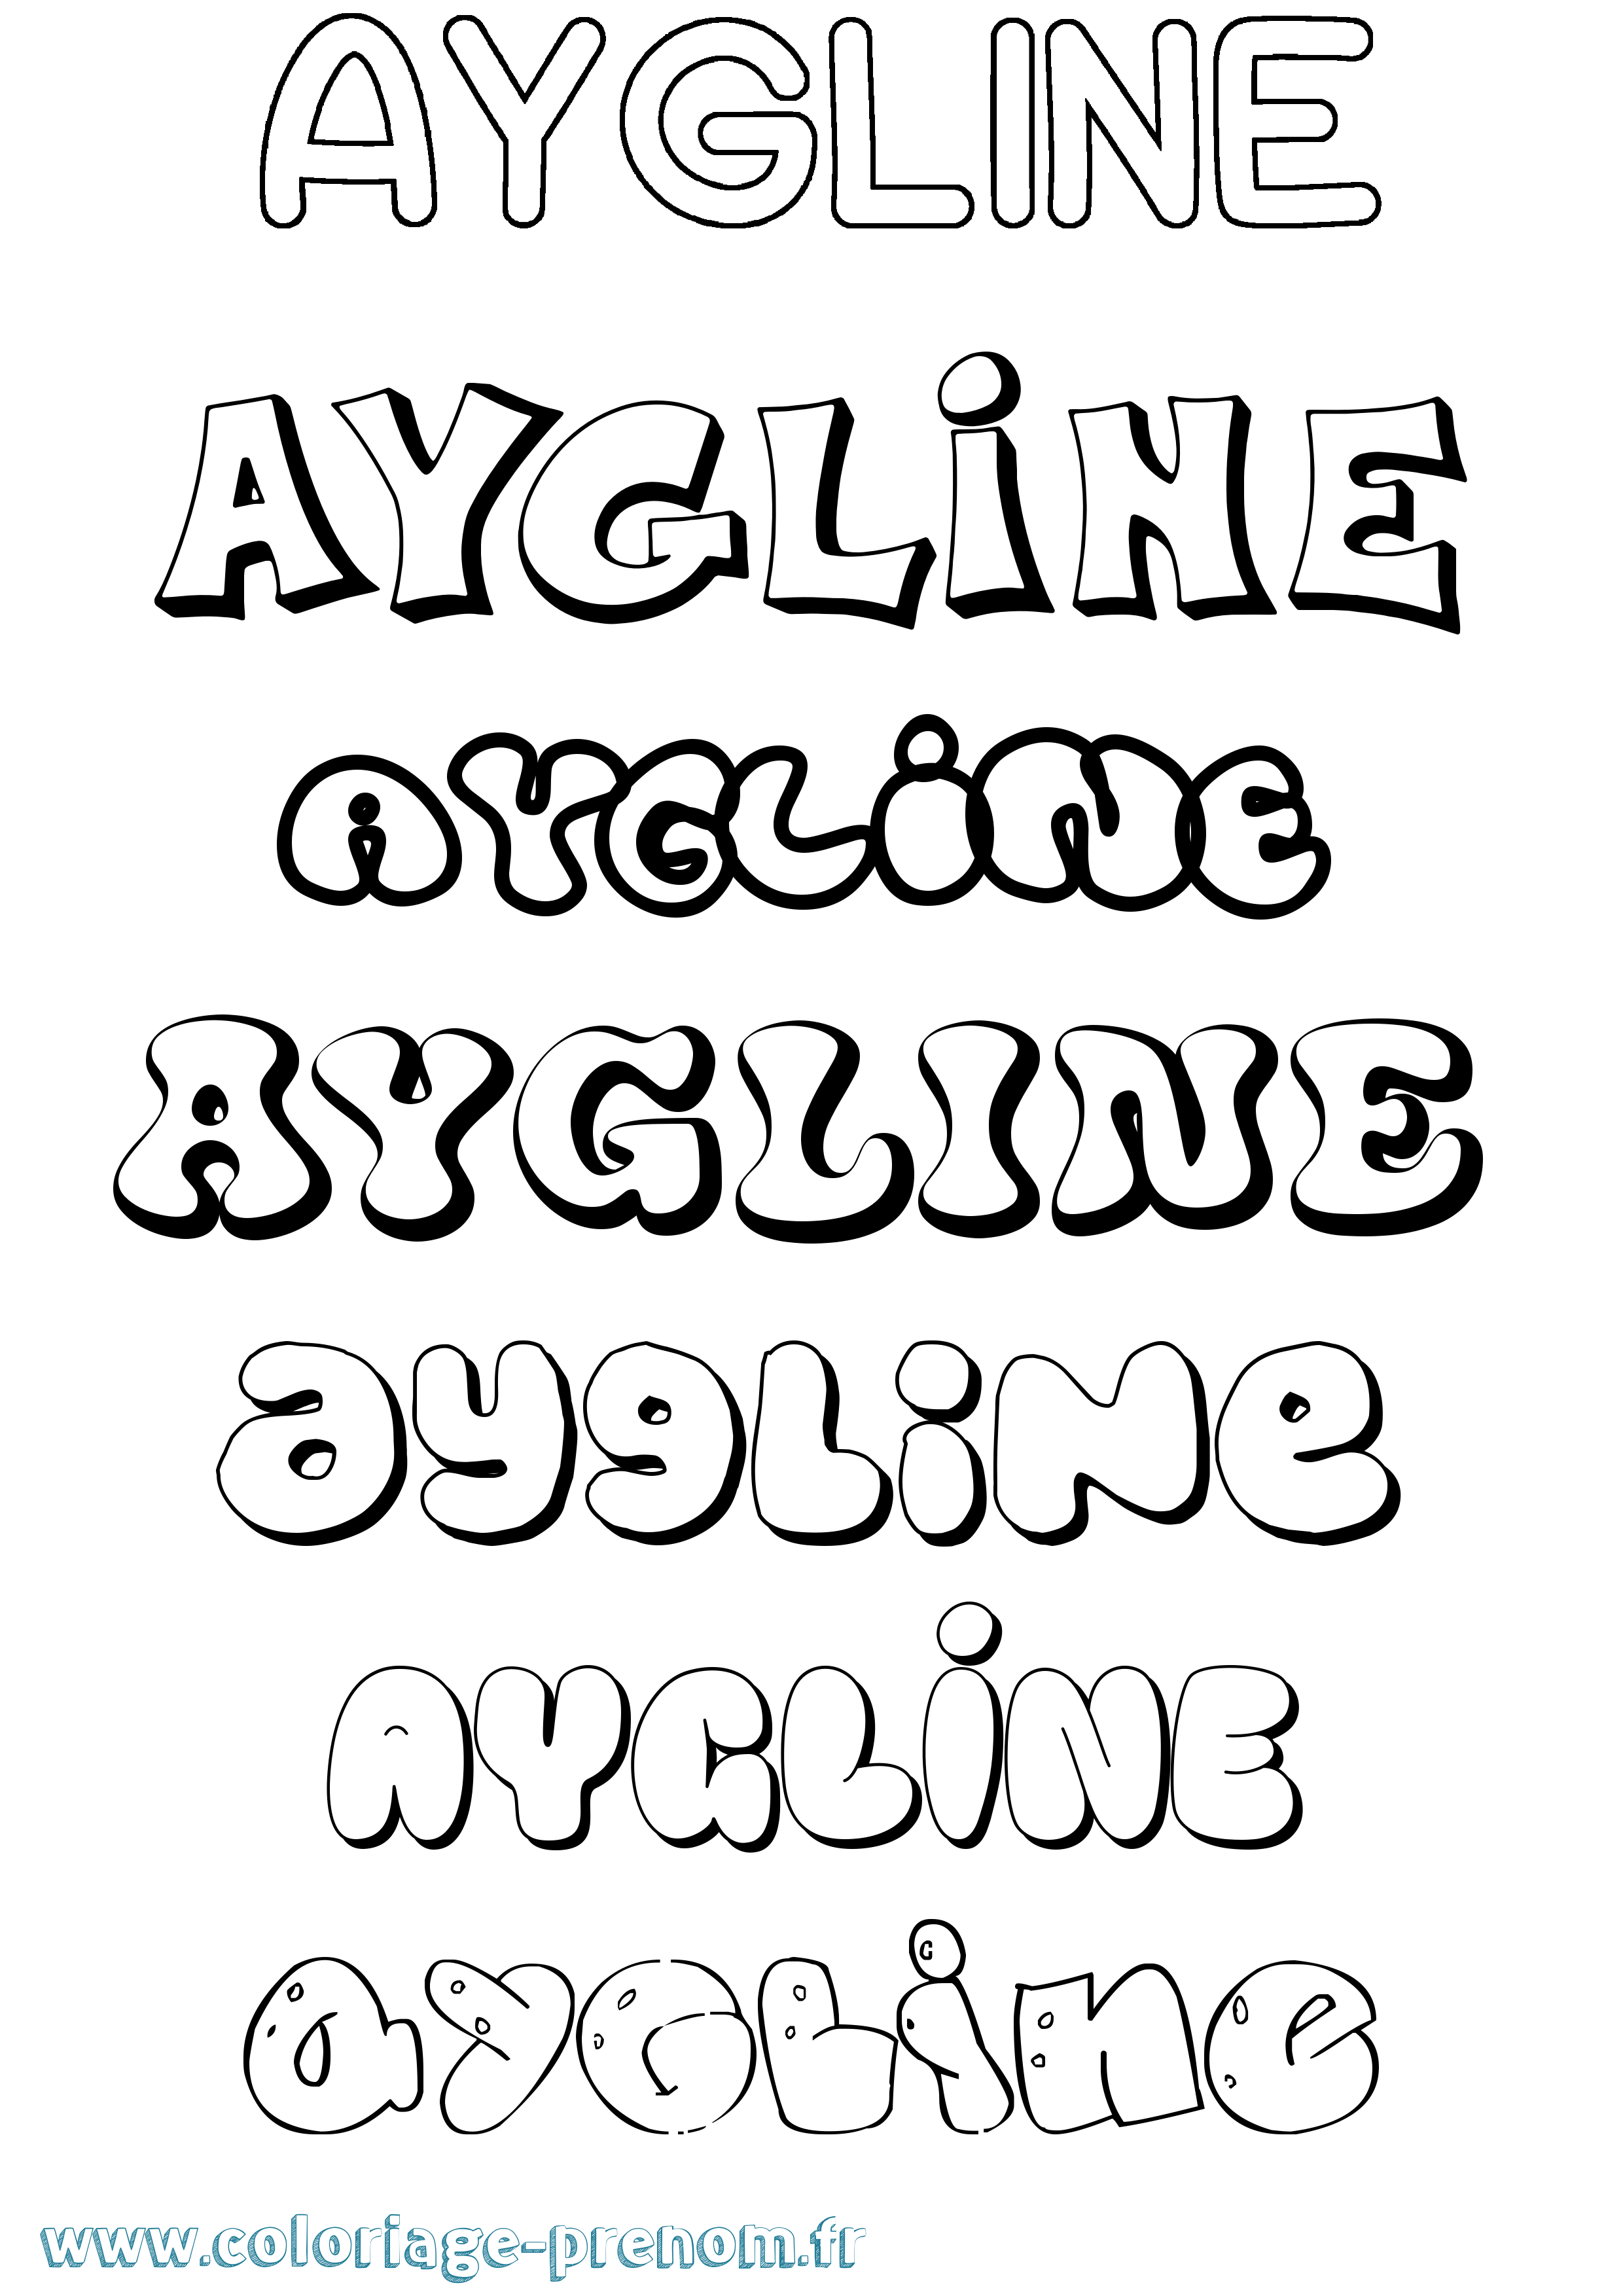 Coloriage prénom Aygline Bubble